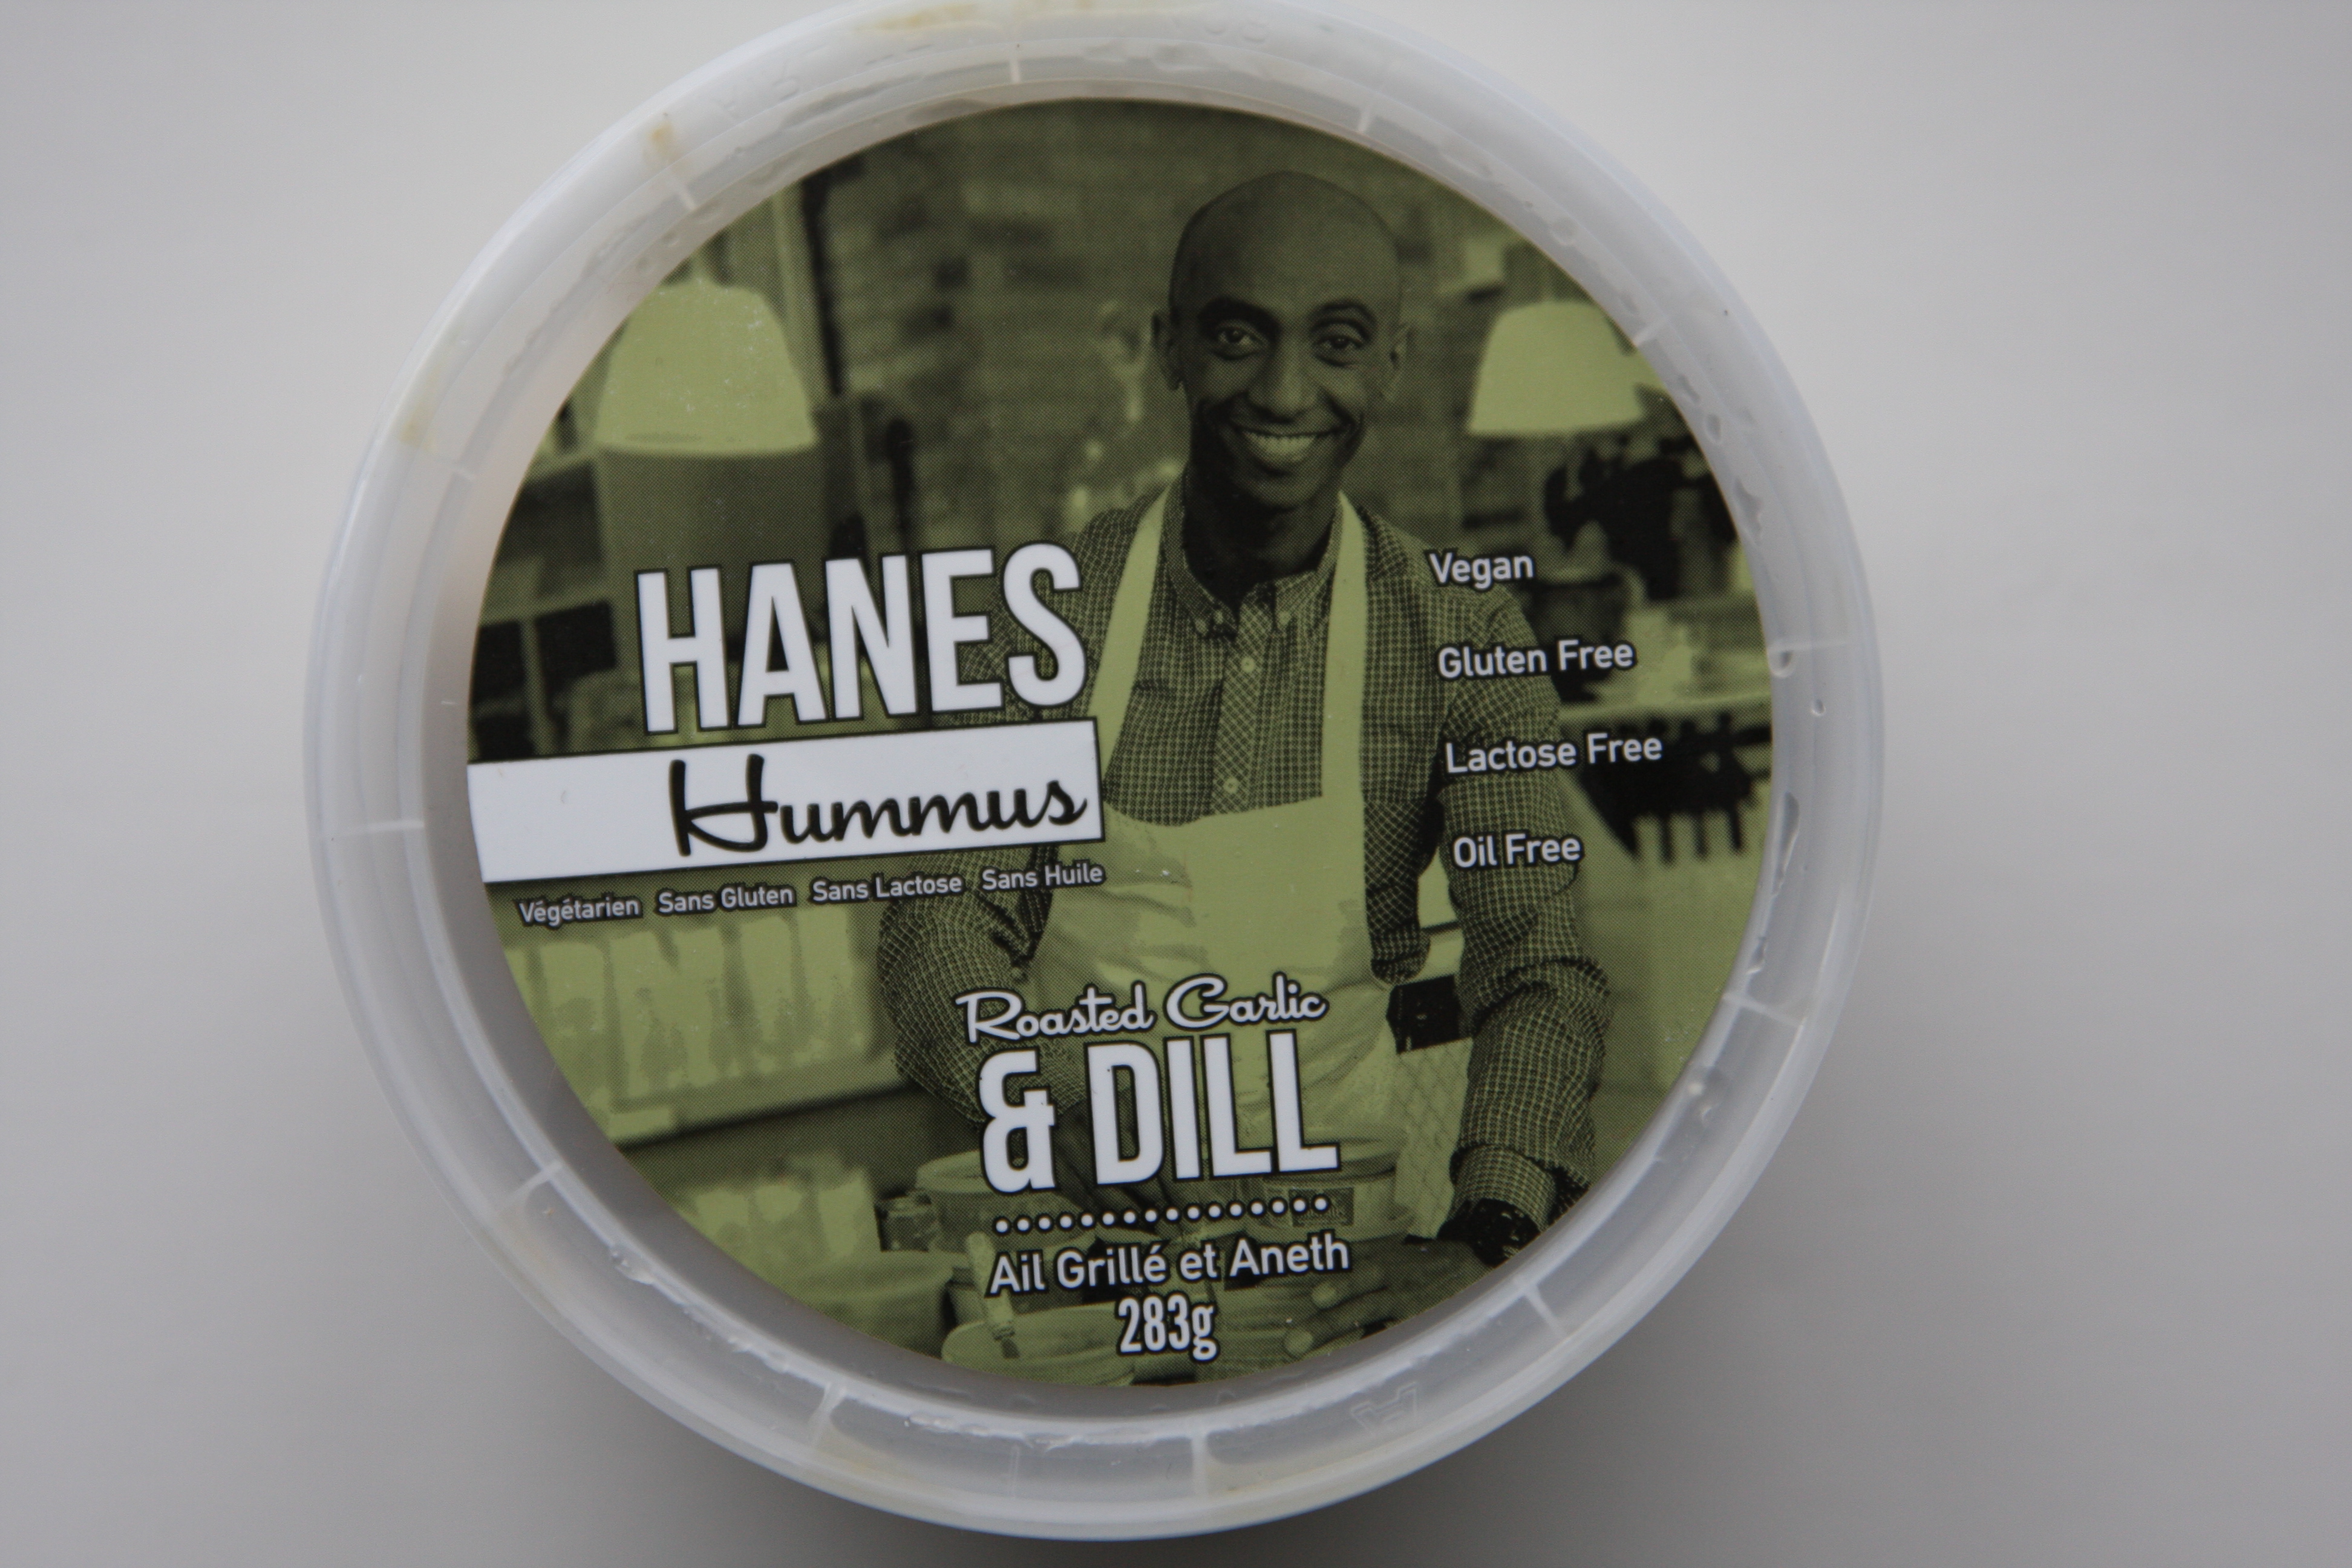 Hanes Hummus roasted garlic & dill lid